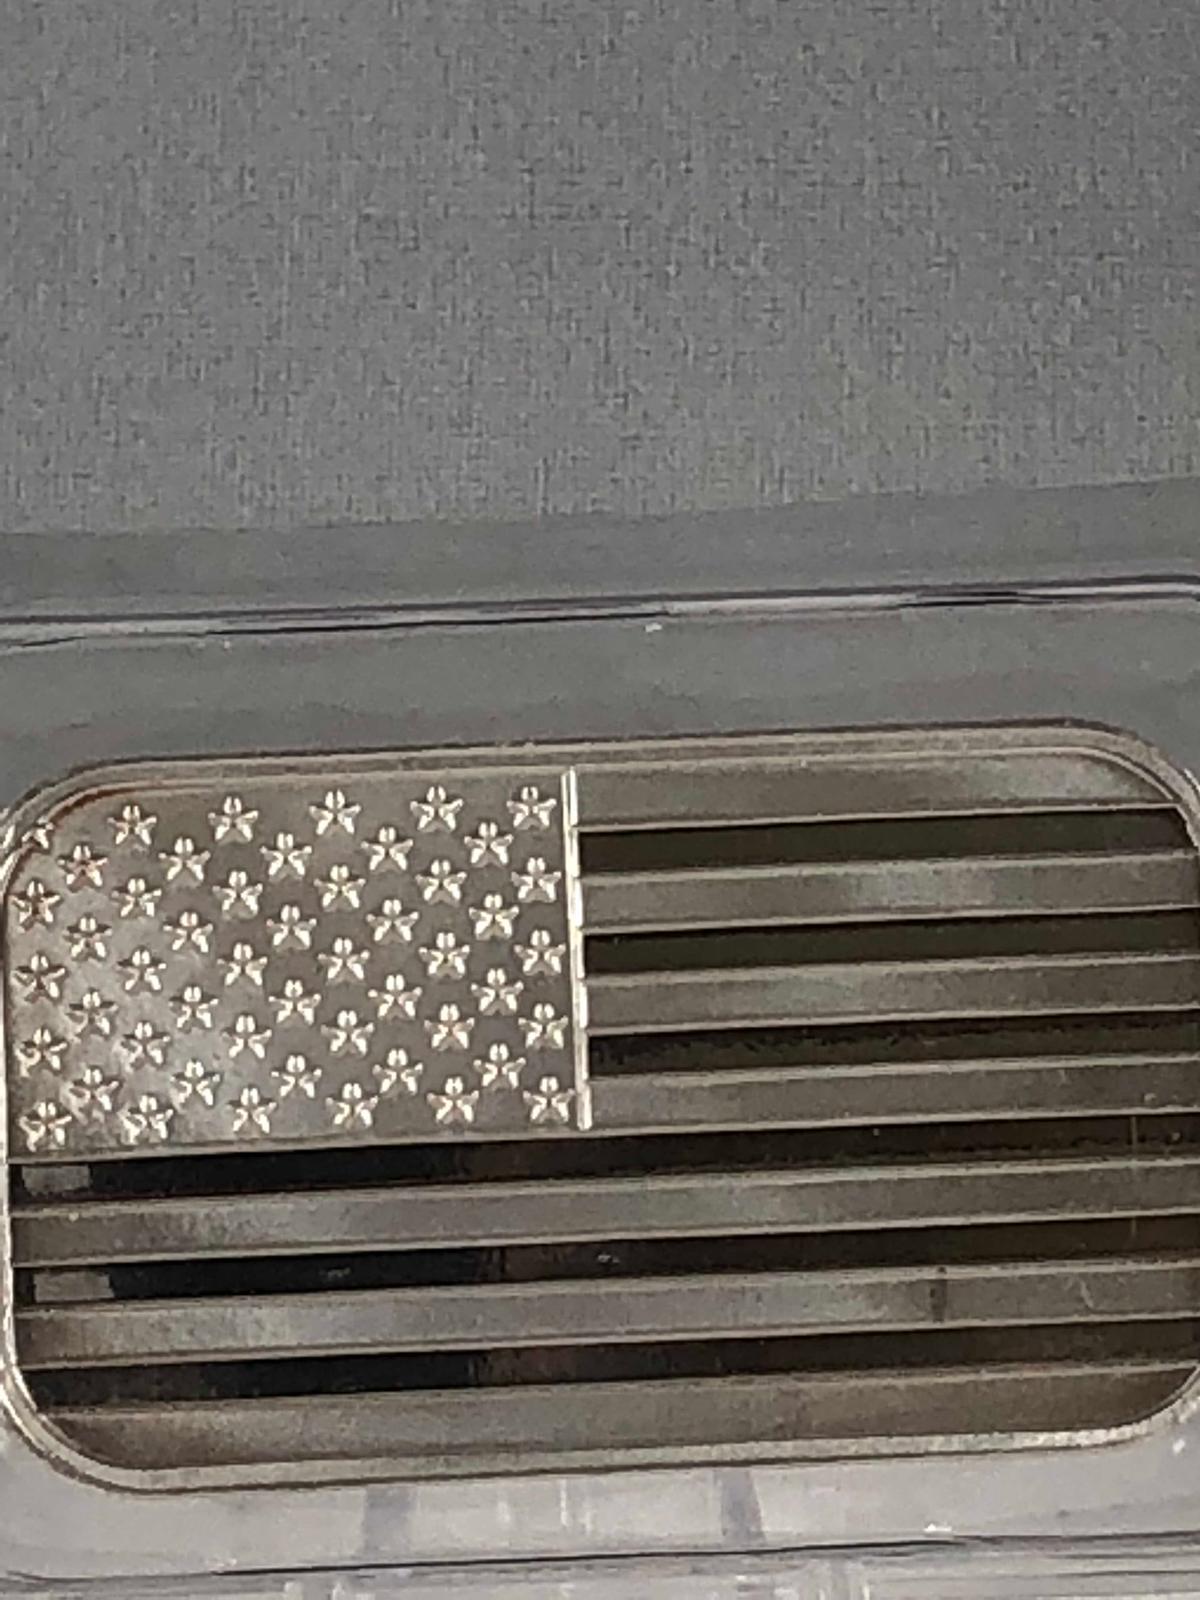 Sealed Two 1 Oz. Silver bars .999 Fine Silver American Flag Design.